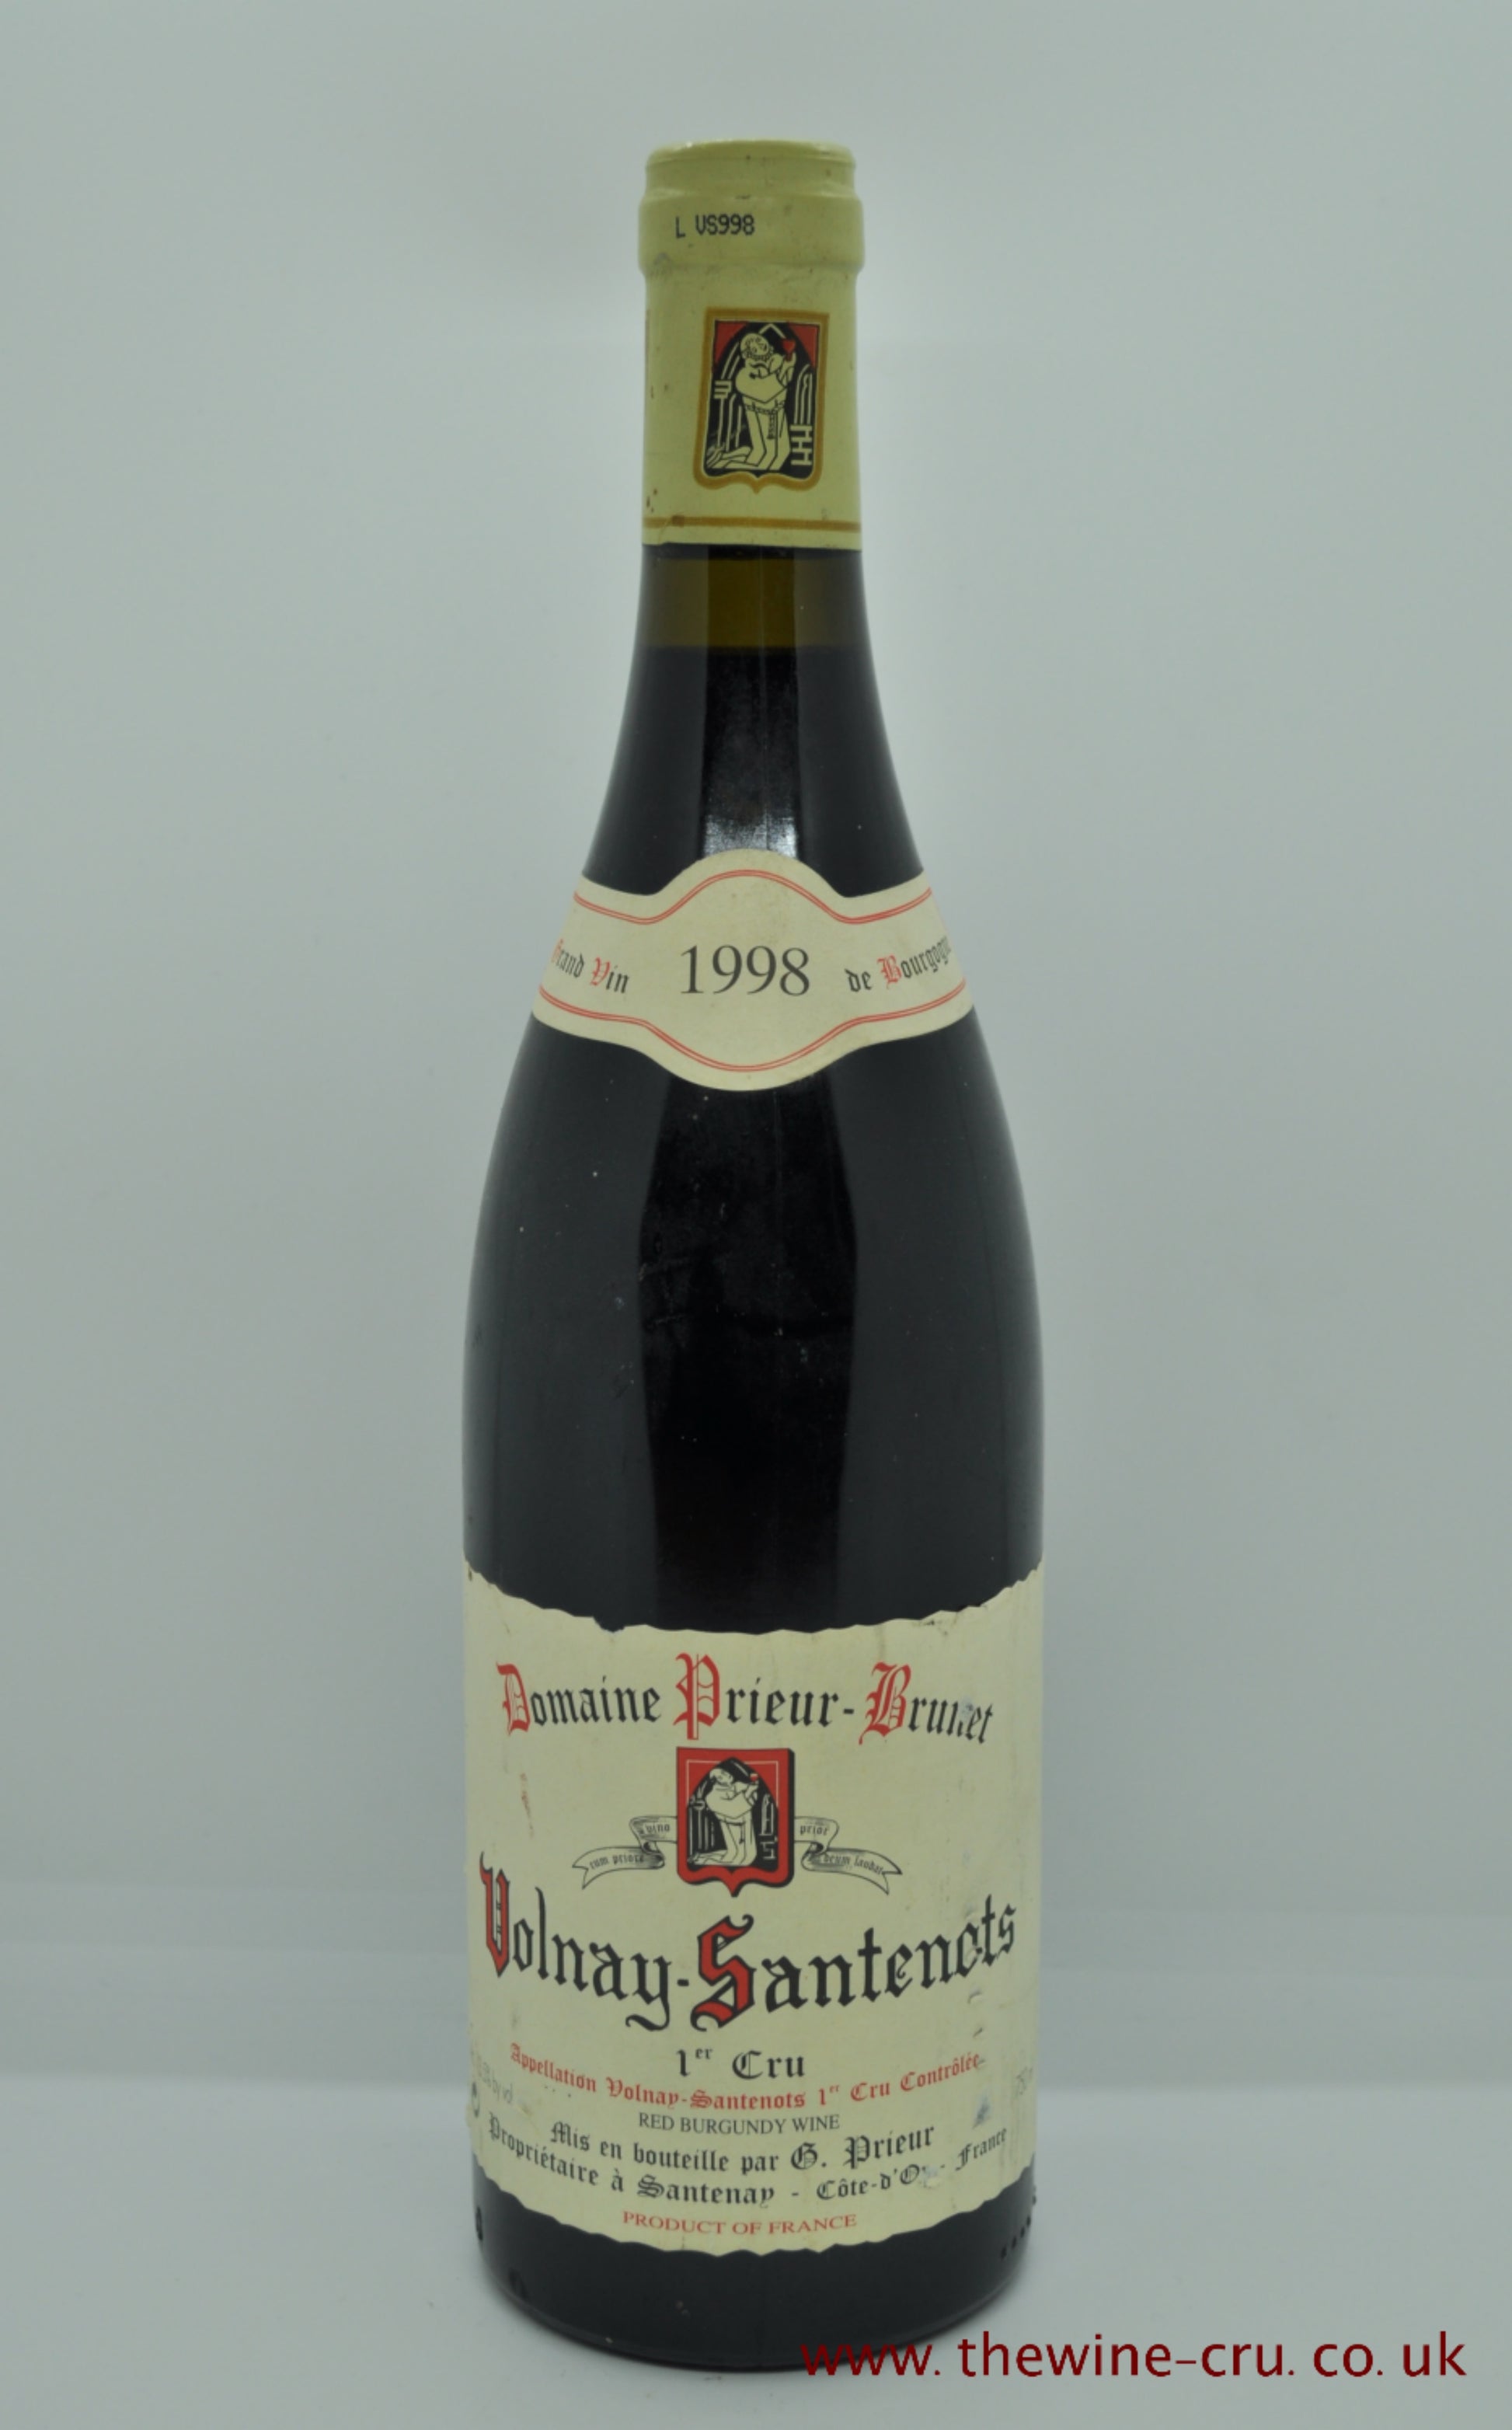 1998 vintage red wine. Volney Santenots 1er Cru Domaine Prieur Brunet 1998. France, Burgundy. Immediate delivery. Free local delivery.